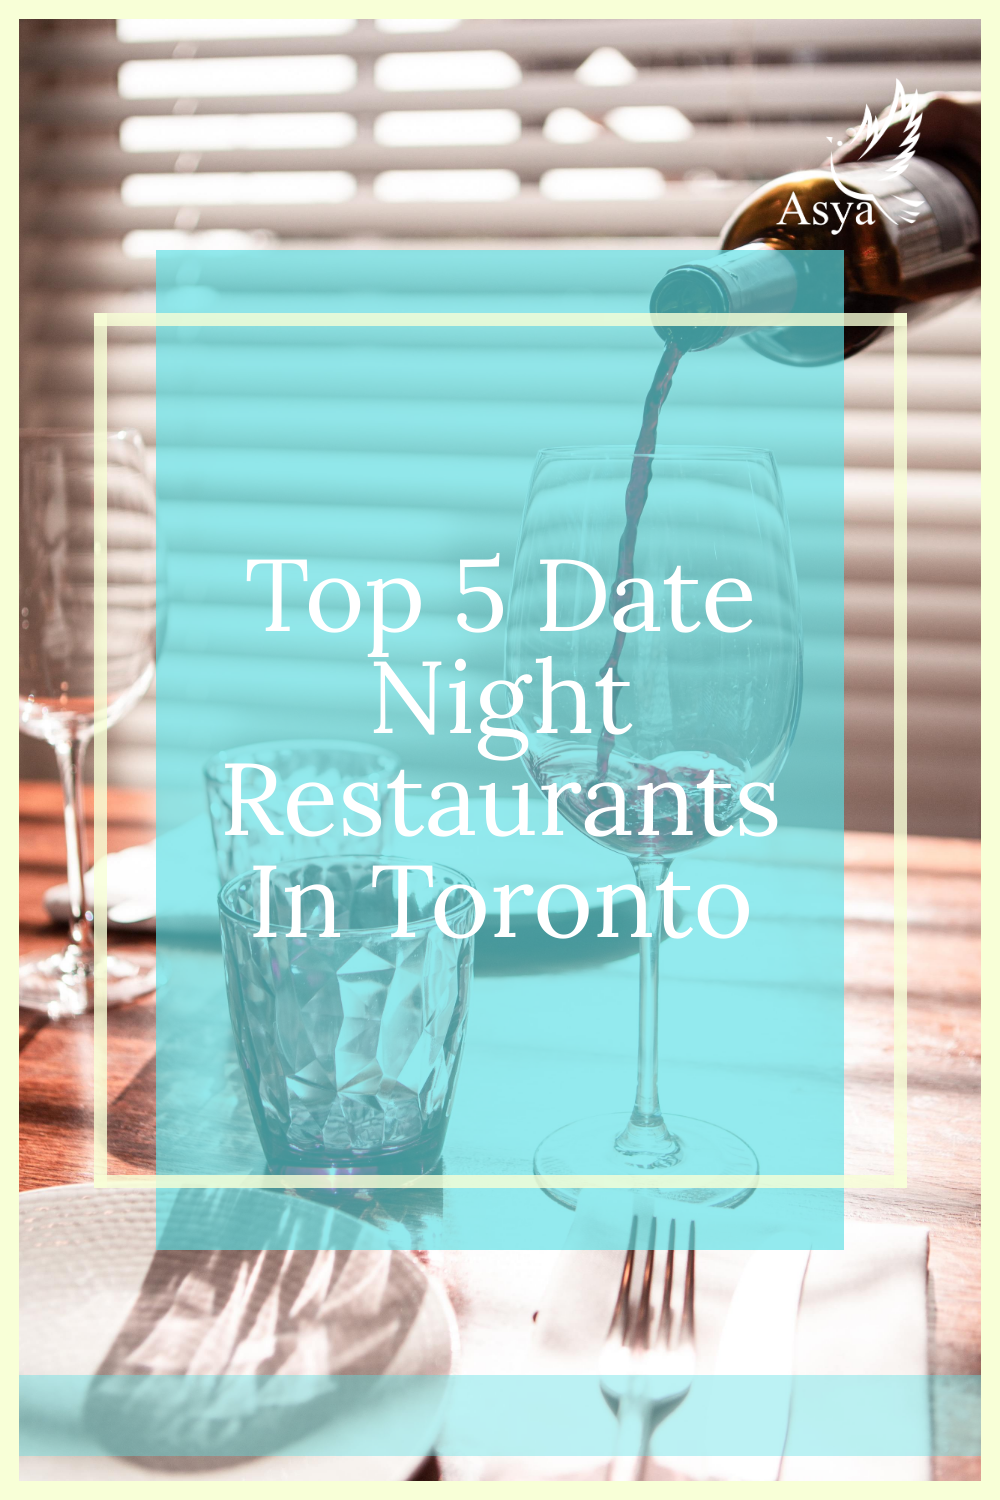 Top 5 Date Night Restaurants In Toronto by Asya.jpg